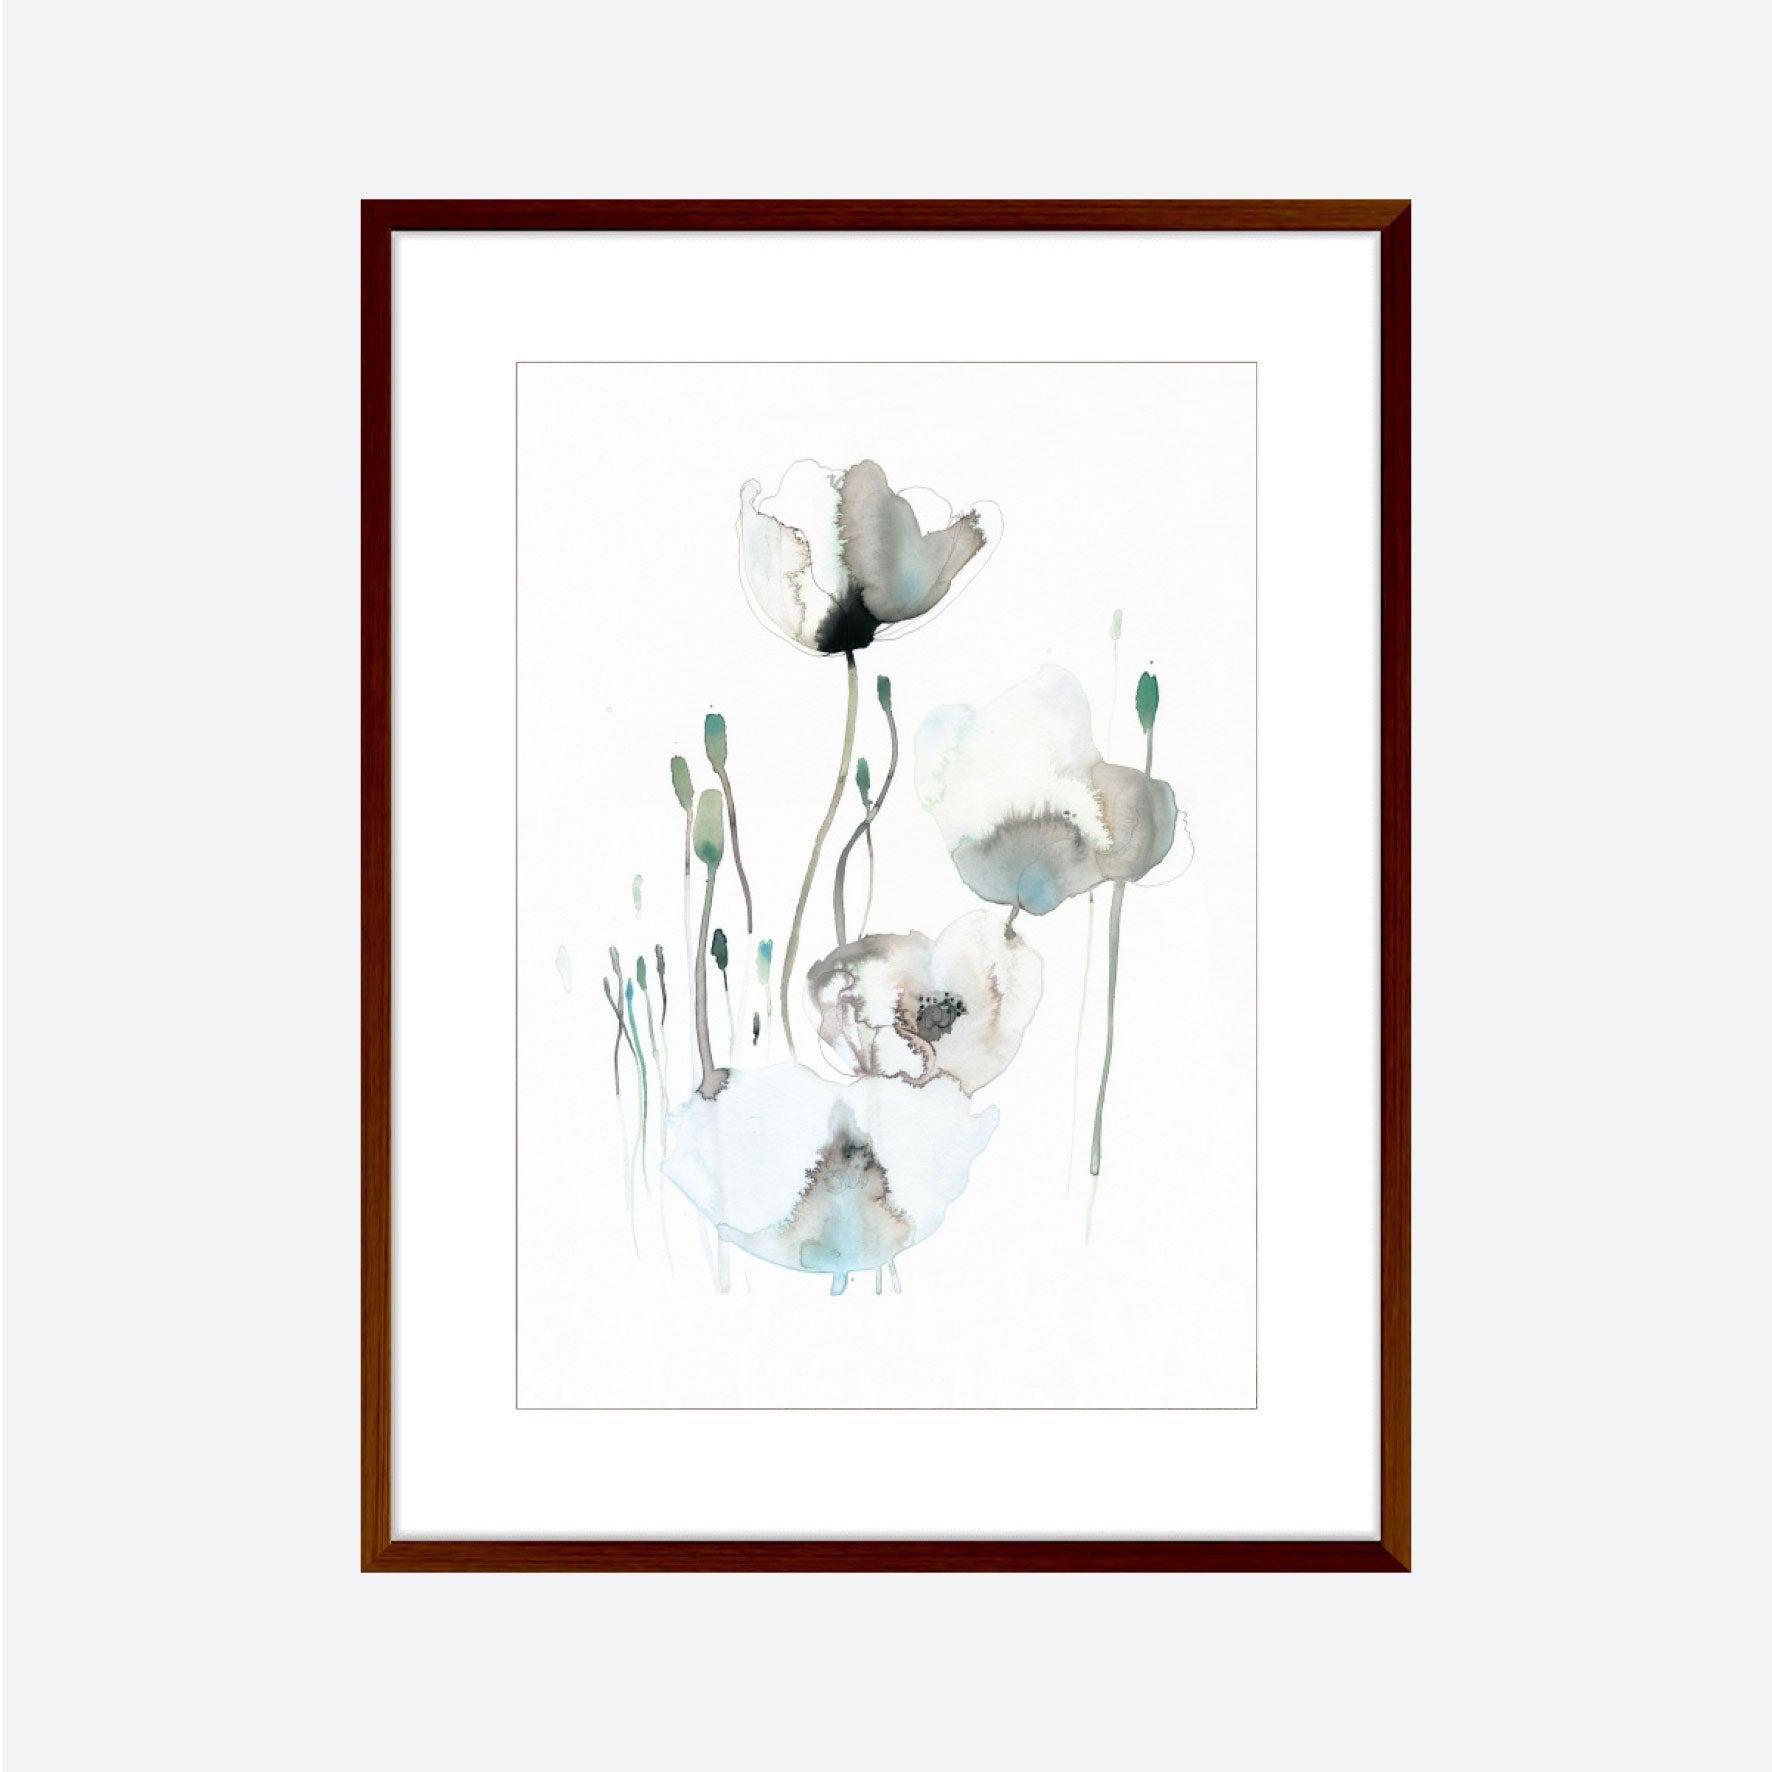 Toril Baekmark - Fine Art Prints - Flower Poster No.11